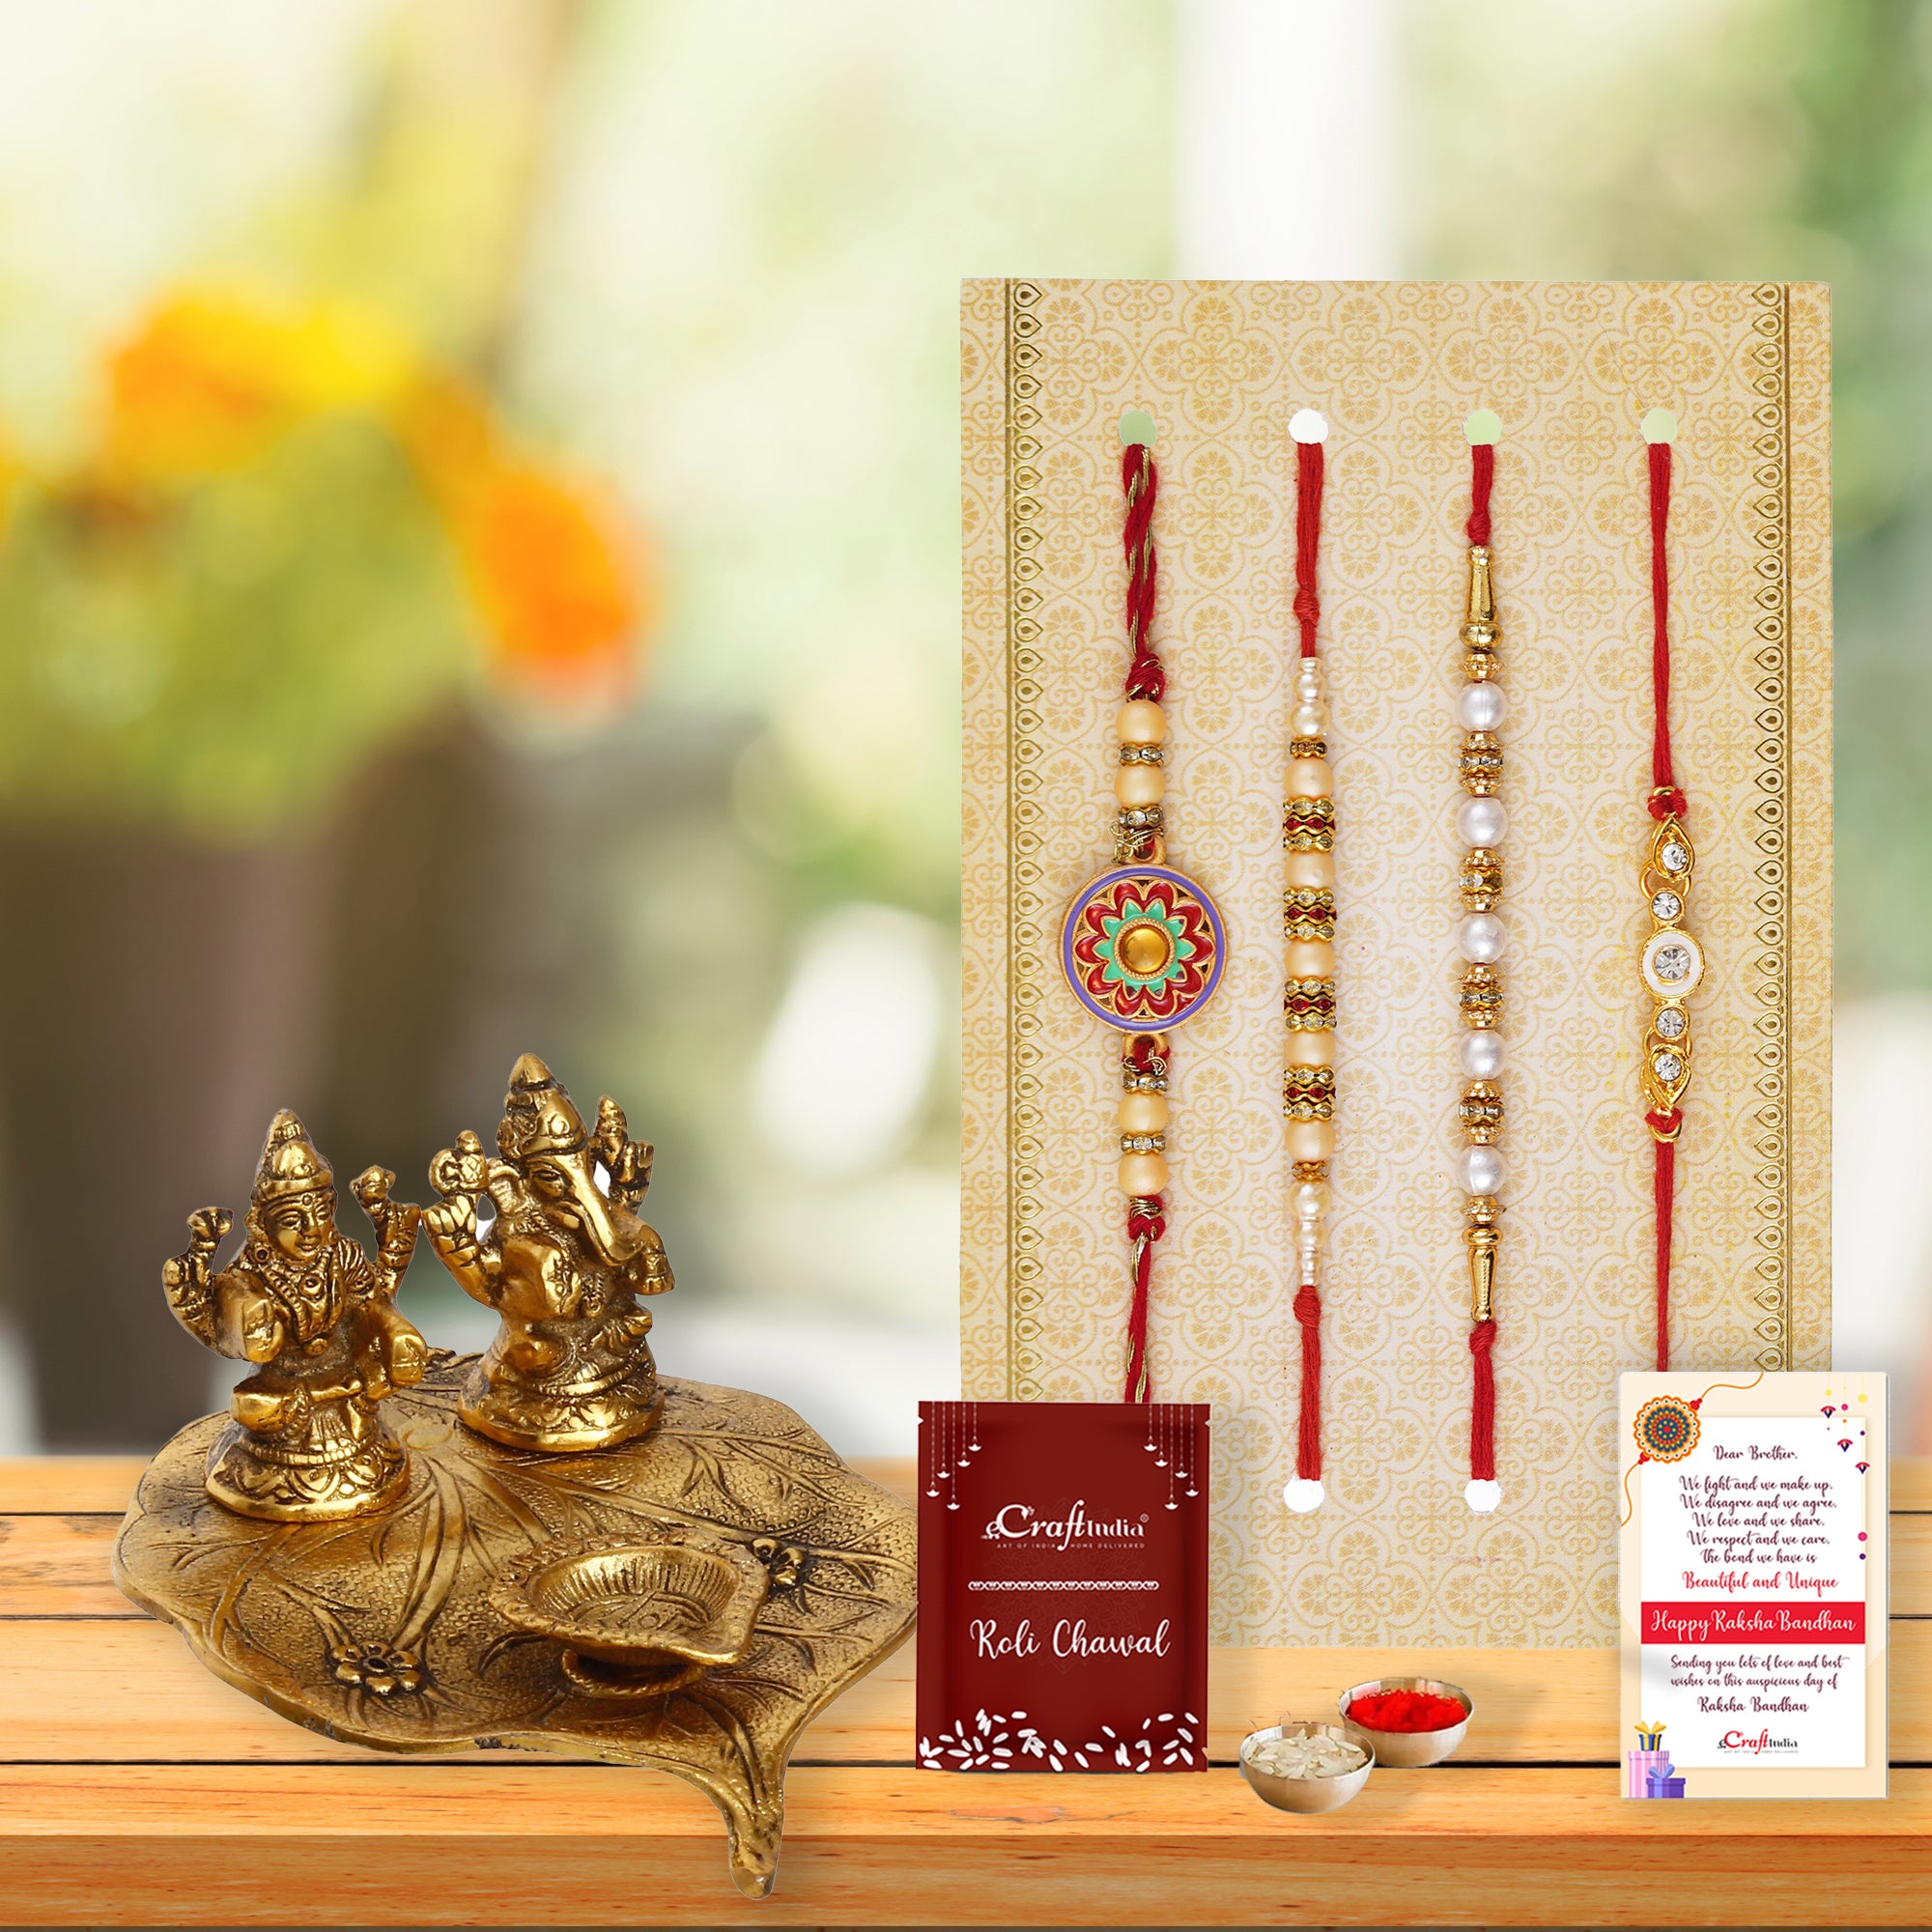 Set of 4 Designer Pearl Rakhis with Golden Goddess Lakshmi and Lord Ganesha Idols with Decorative Diya, Roli Chawal Pack, Raksha Bandhan Greeting Card